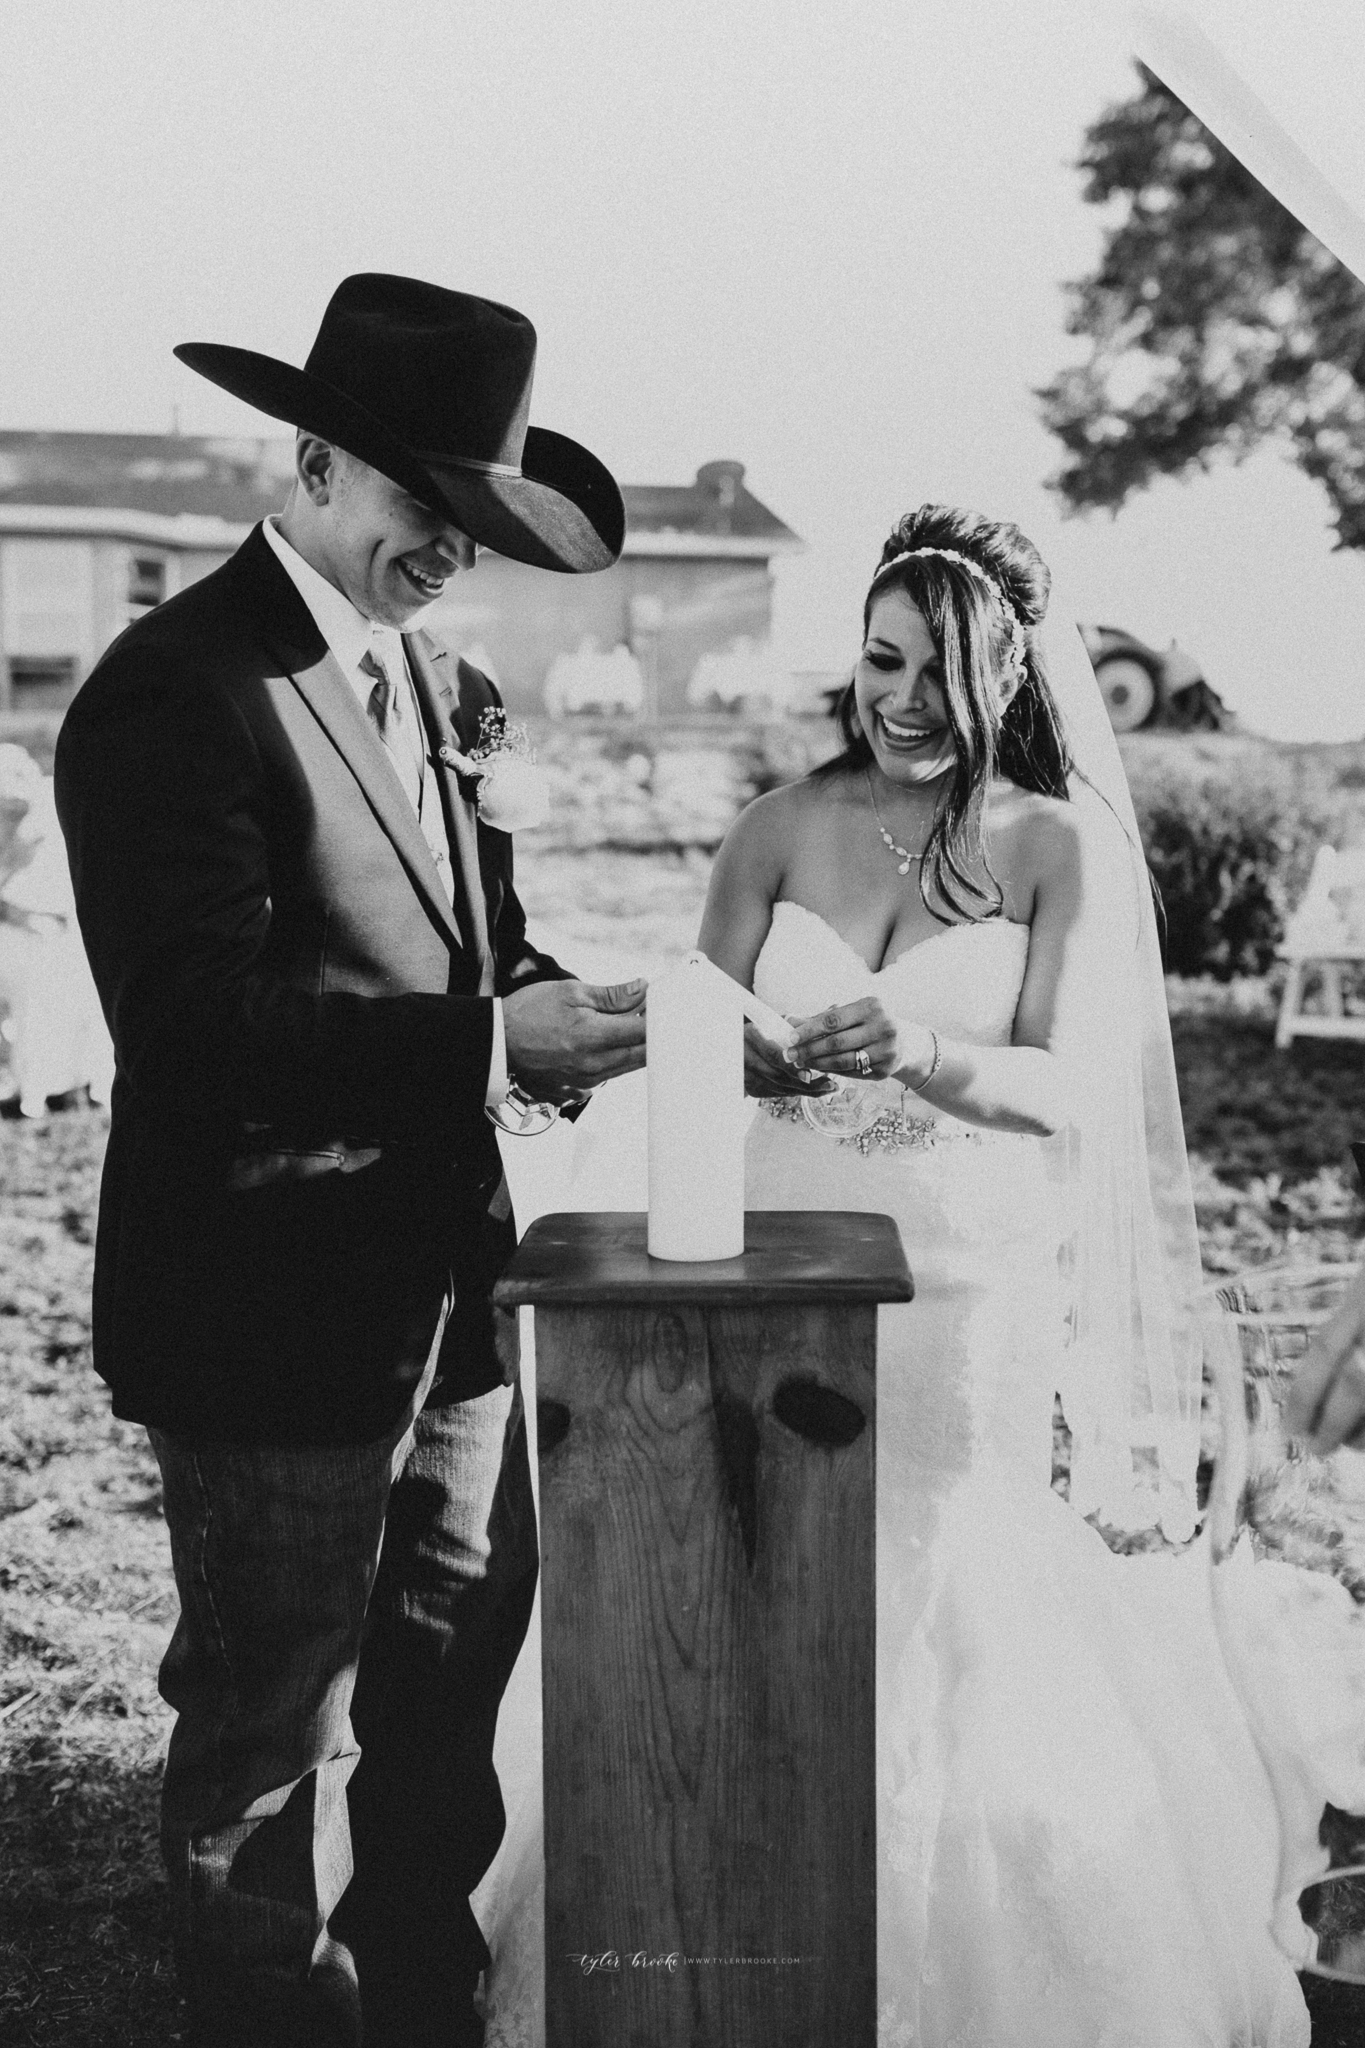 Edgewood New Mexico_Country Wedding Photographer_www.tylerbrooke.com_Kate Kauffman (13 of 35)